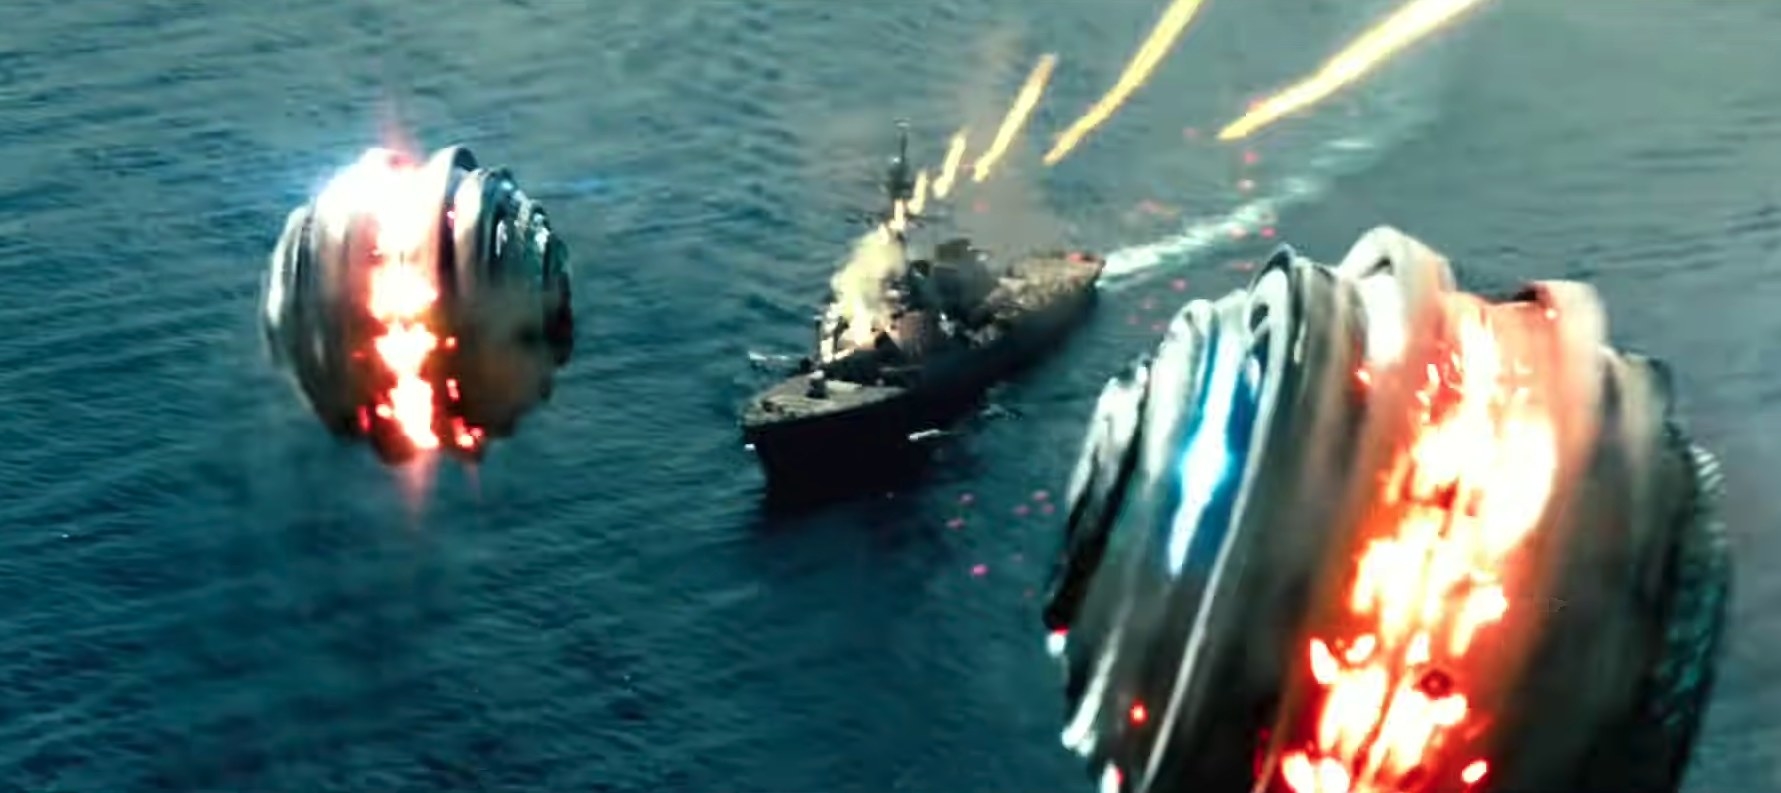 Alien ships speed towards a battleship that sprays bullets at them